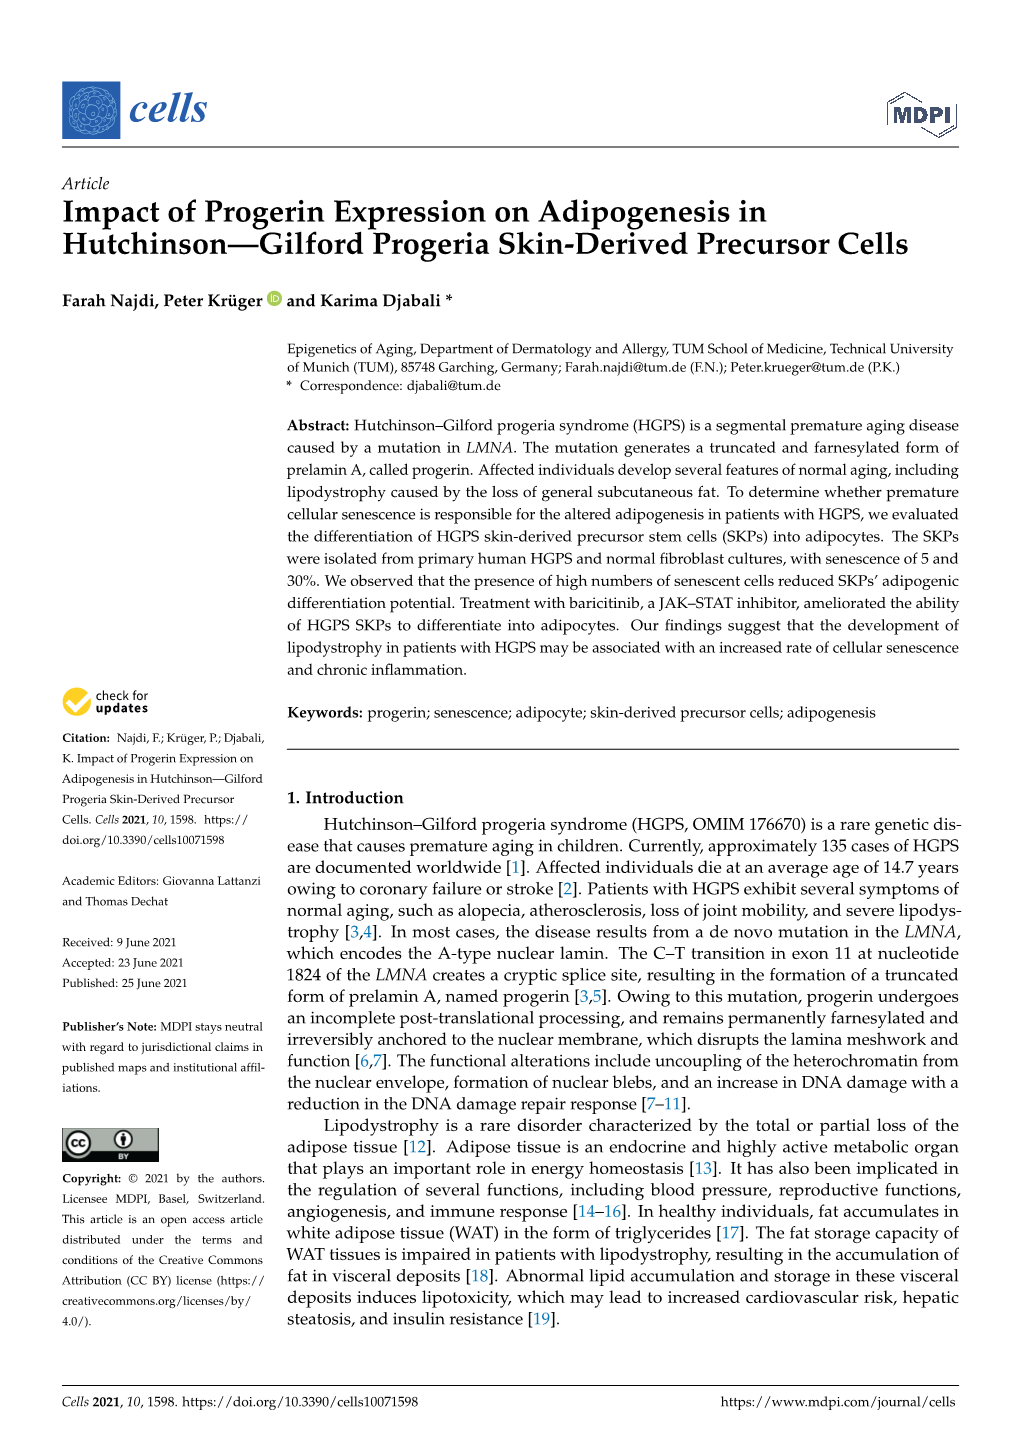 Impact of Progerin Expression on Adipogenesis in Hutchinson—Gilford Progeria Skin-Derived Precursor Cells